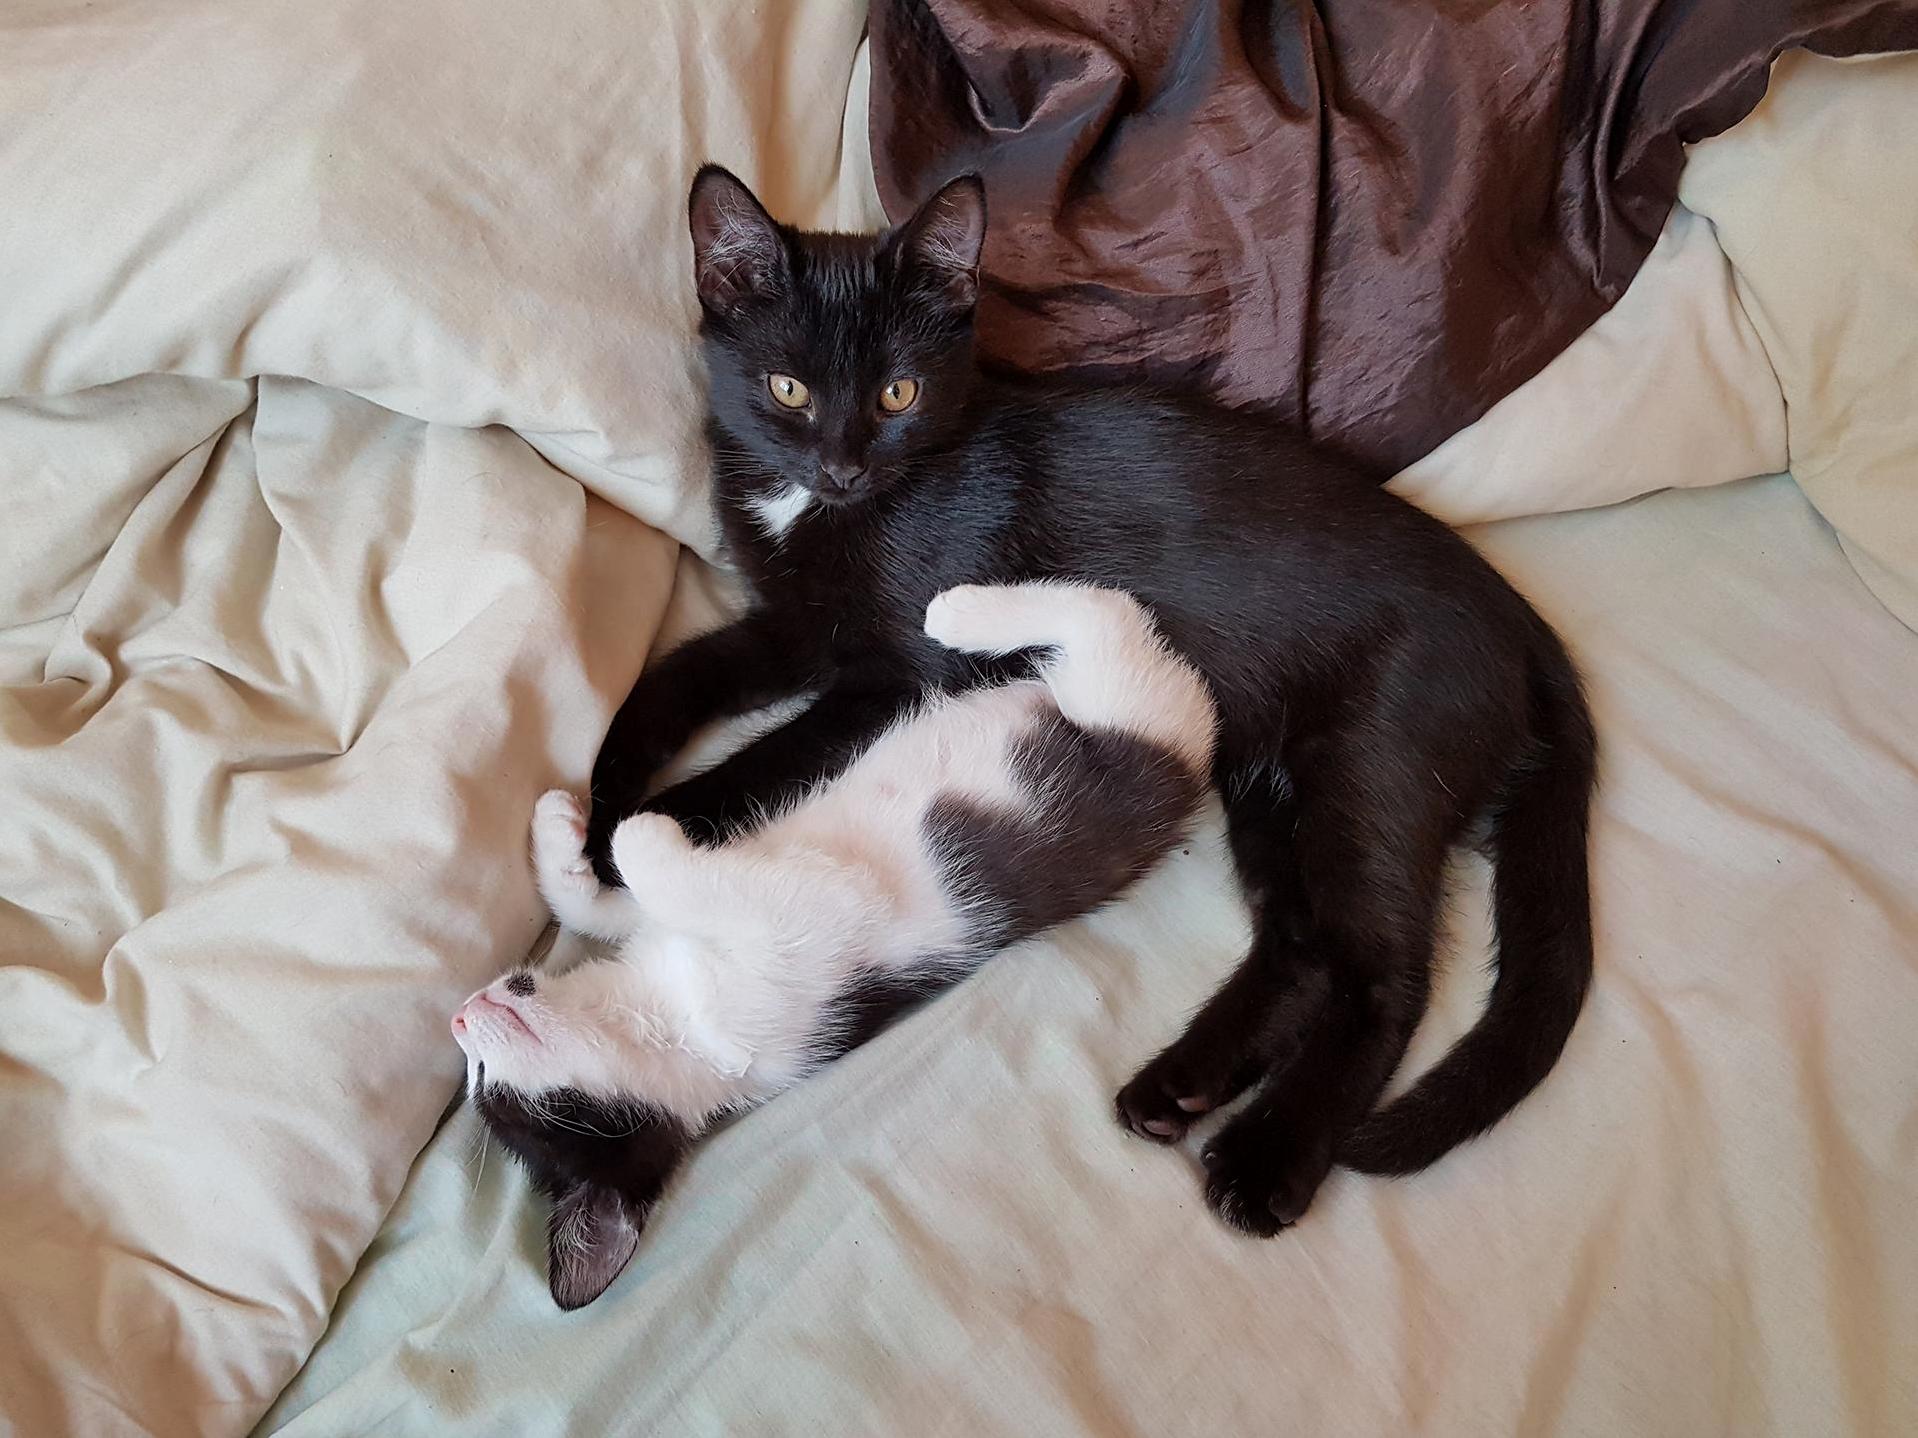 This is tango keeping his eye on sleeping mia – little kitten we found two weeks ago